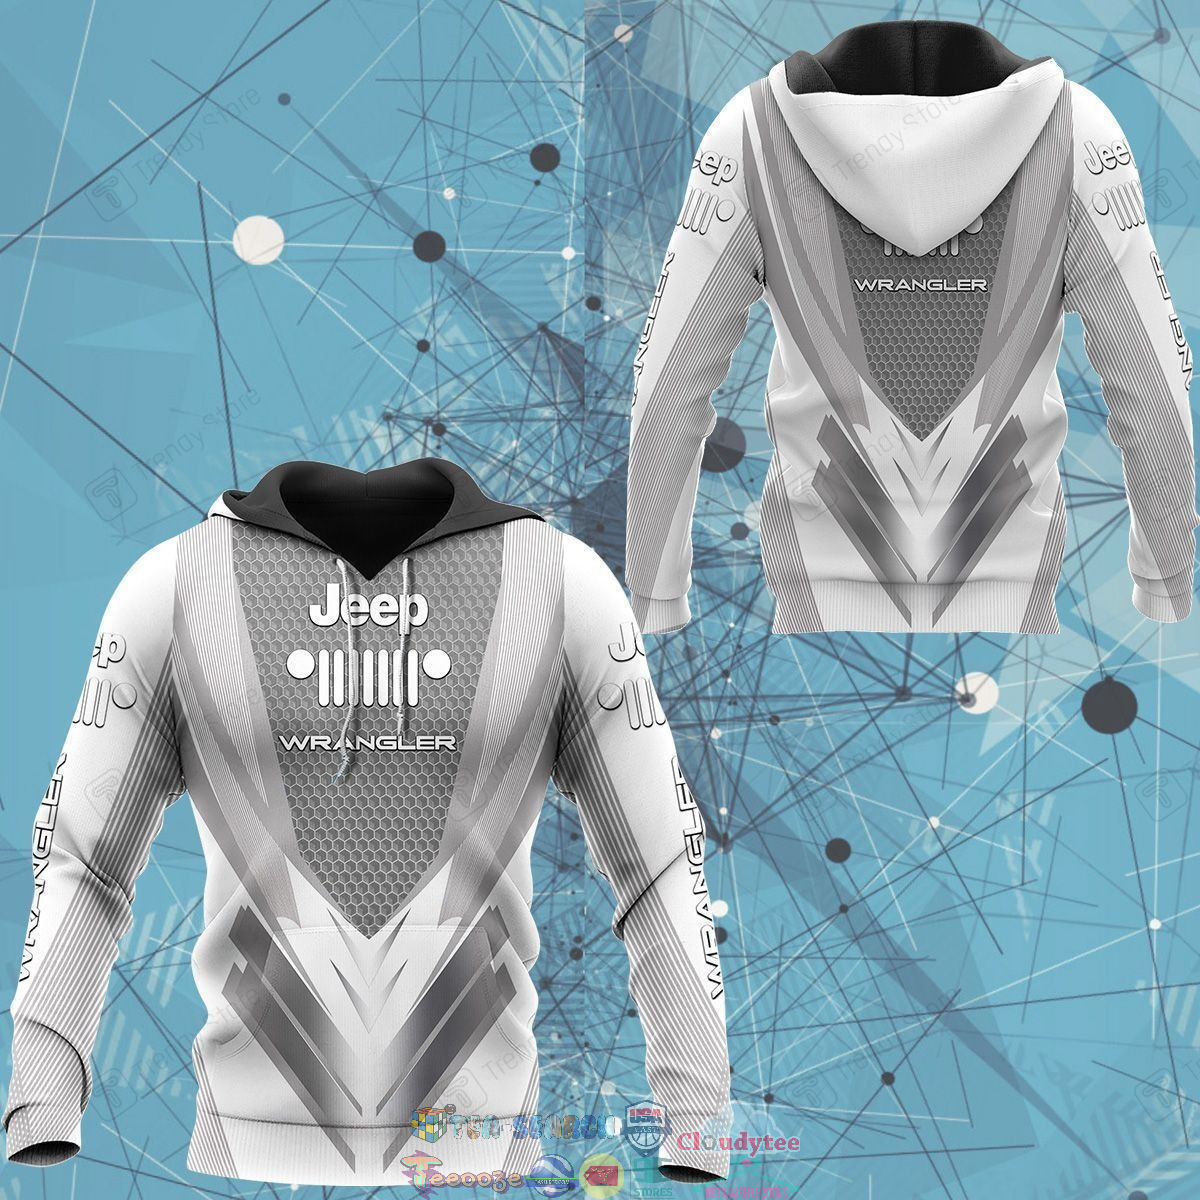 IwsyM71J-TH050822-02xxxJeep-Wrangler-ver-7-3D-hoodie-and-t-shirt3.jpg